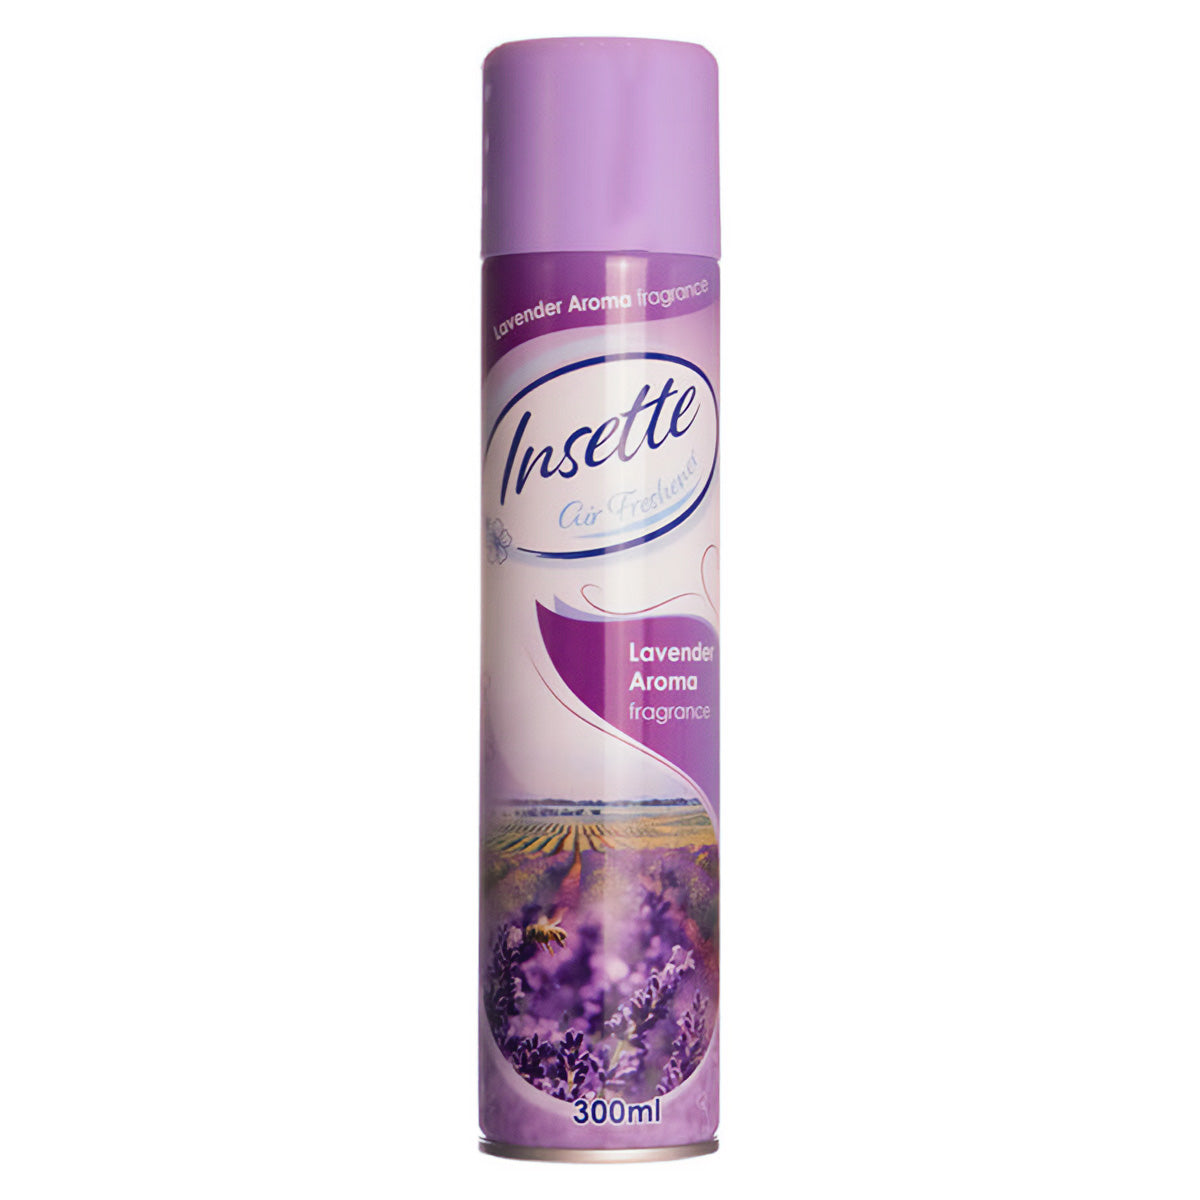 An Insette - Air Freshener Lavender Aroma - 300ml bottle on a white background.